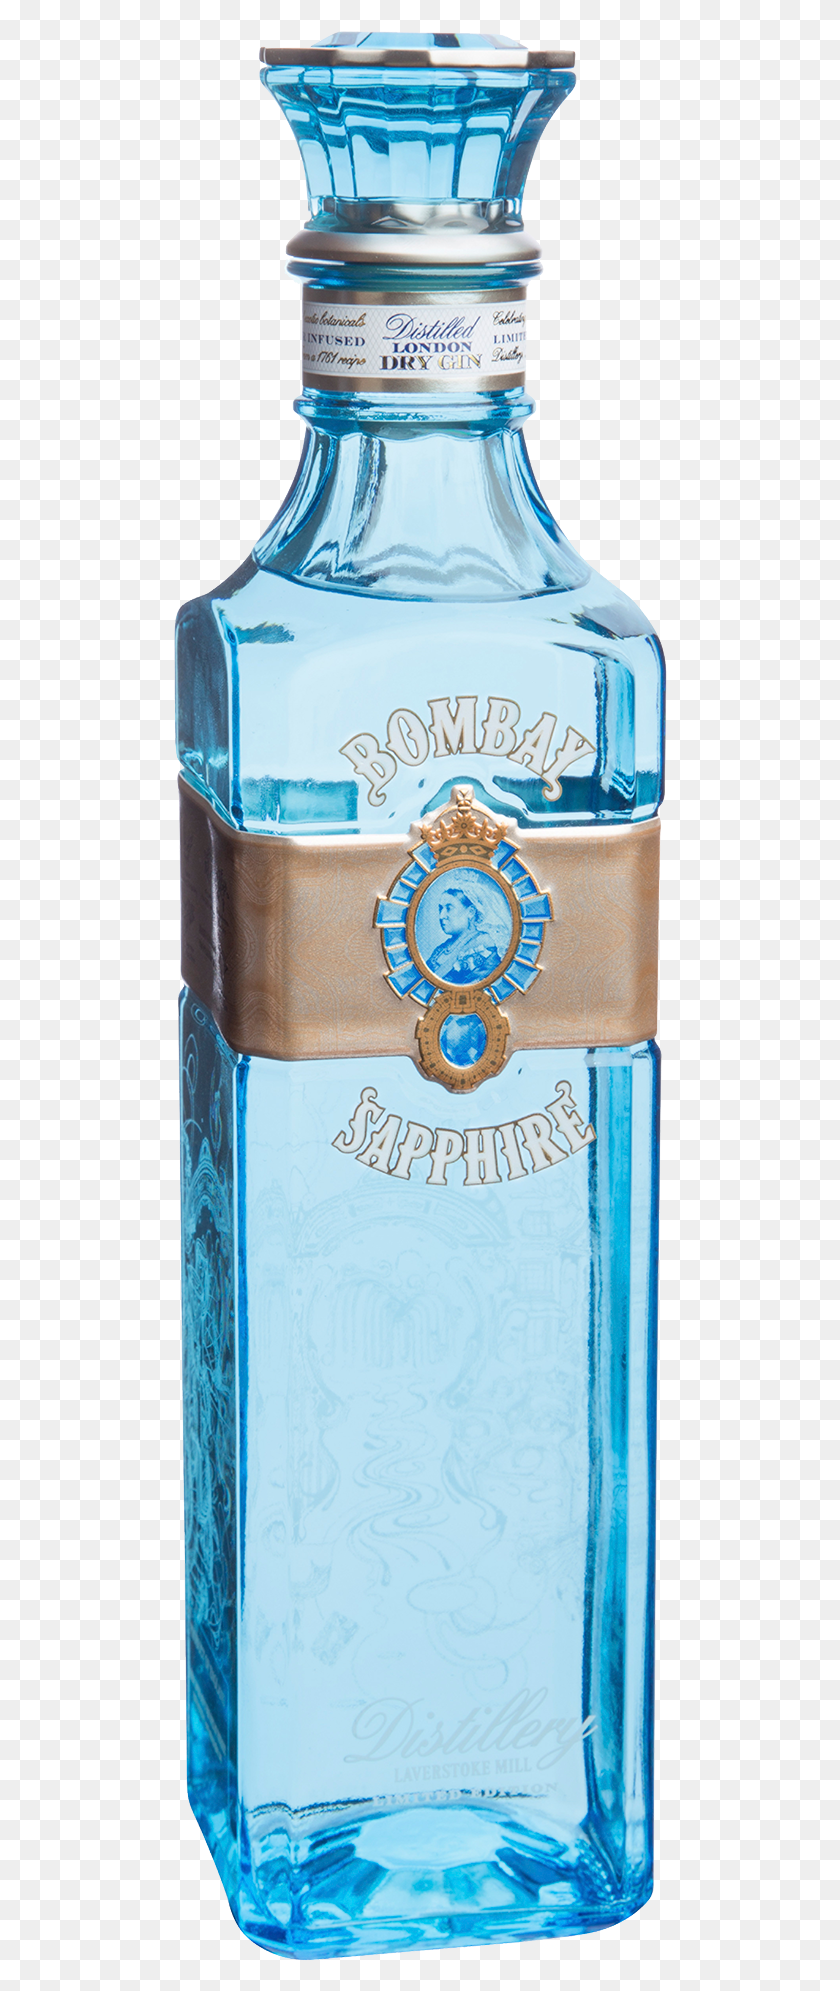 494x1931 Bombay Sapphire London Dry Gin Ликероводочный Завод Laverstoke Mill Bombay Sapphire Gin Limited Edition, Логотип, Символ, Товарный Знак Hd Png Скачать